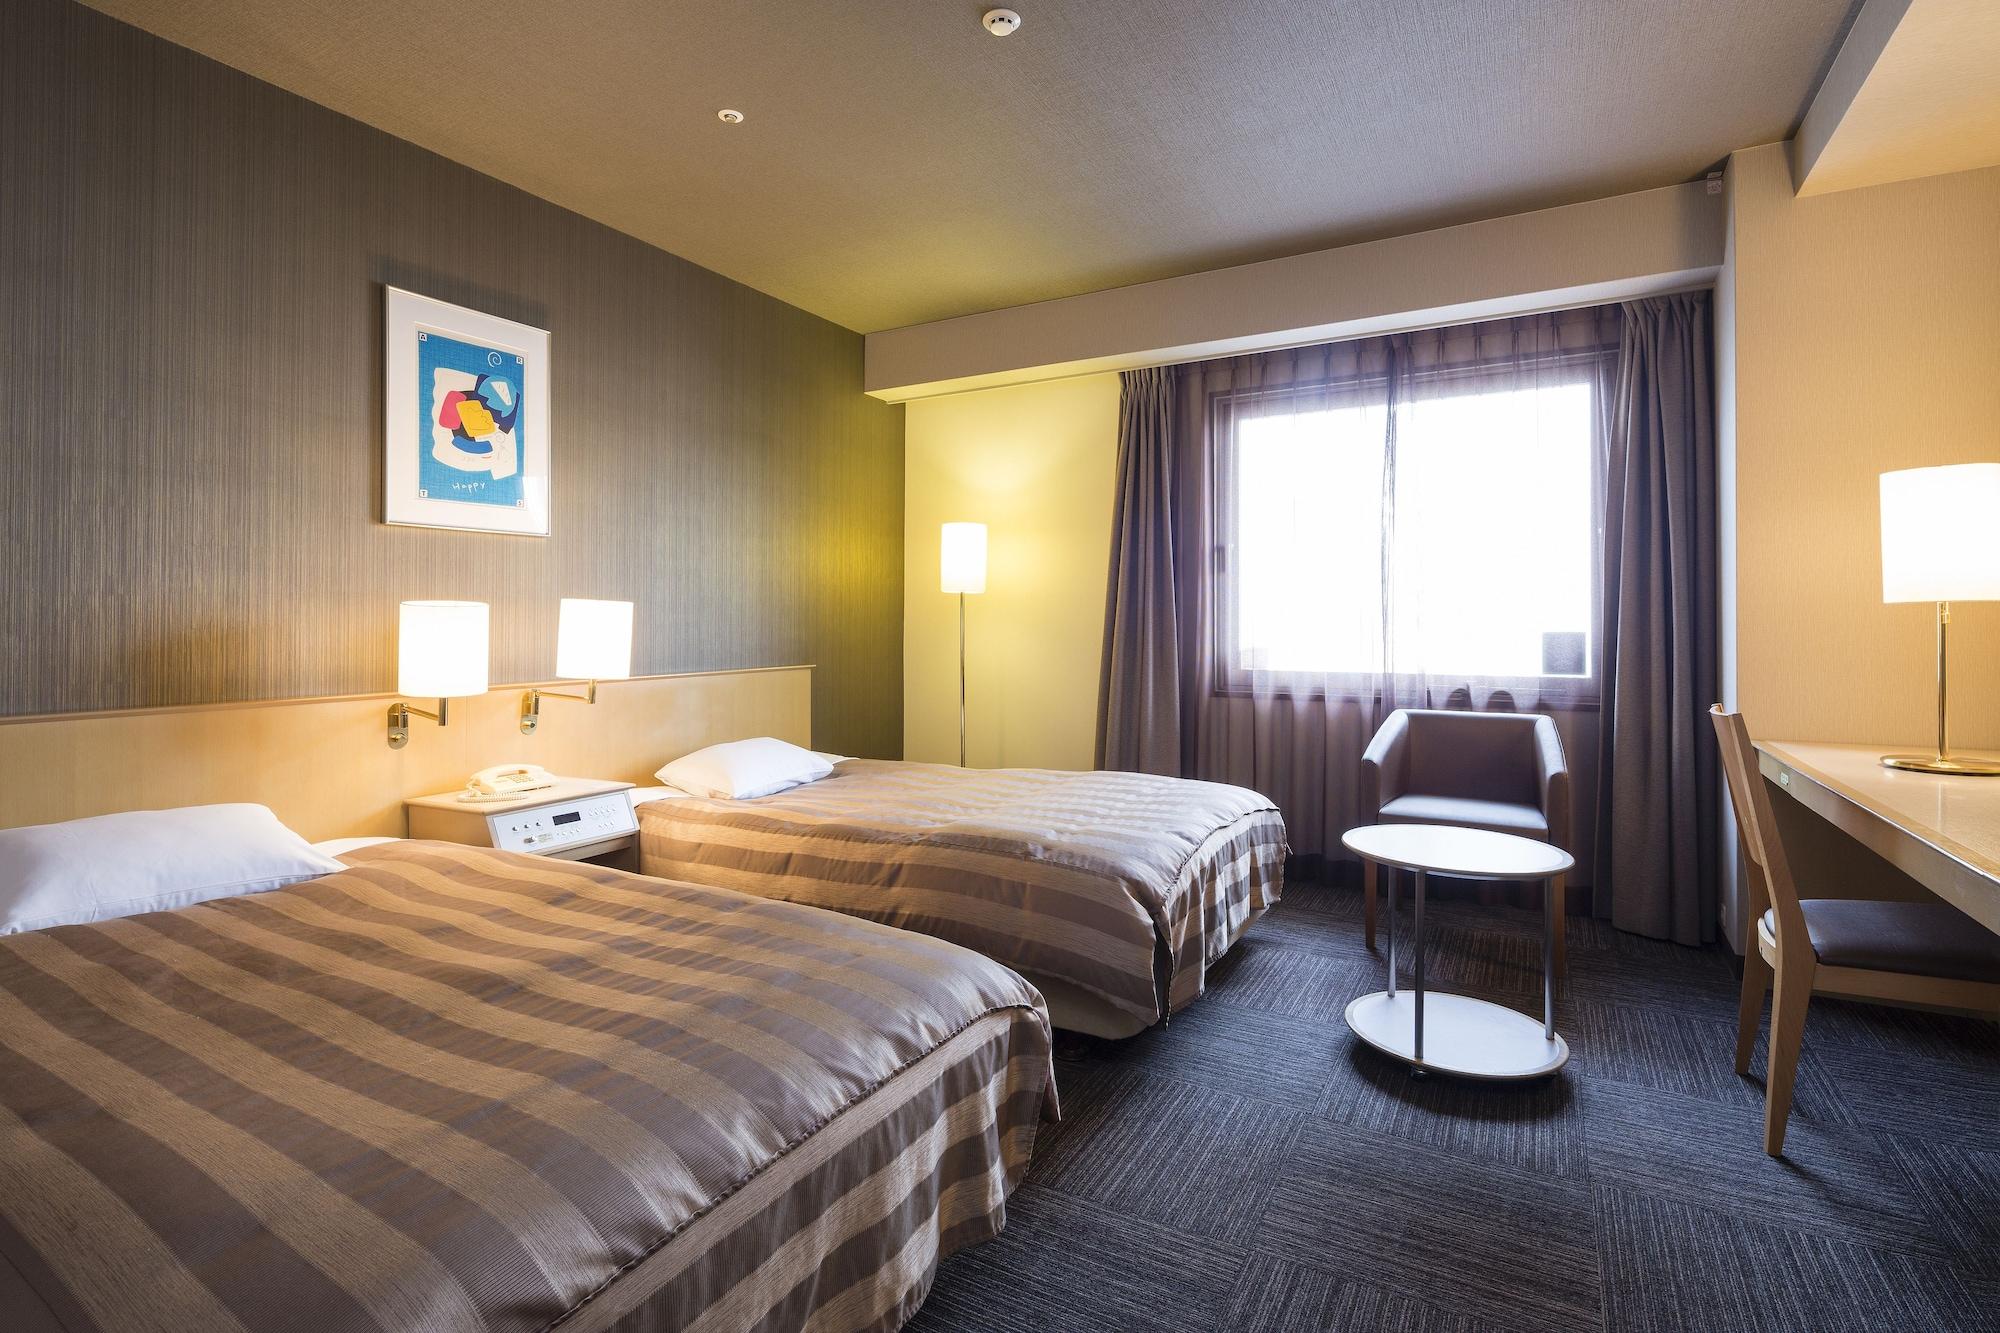 Ark Hotel Kyoto -Route Inn Hotels- Экстерьер фото